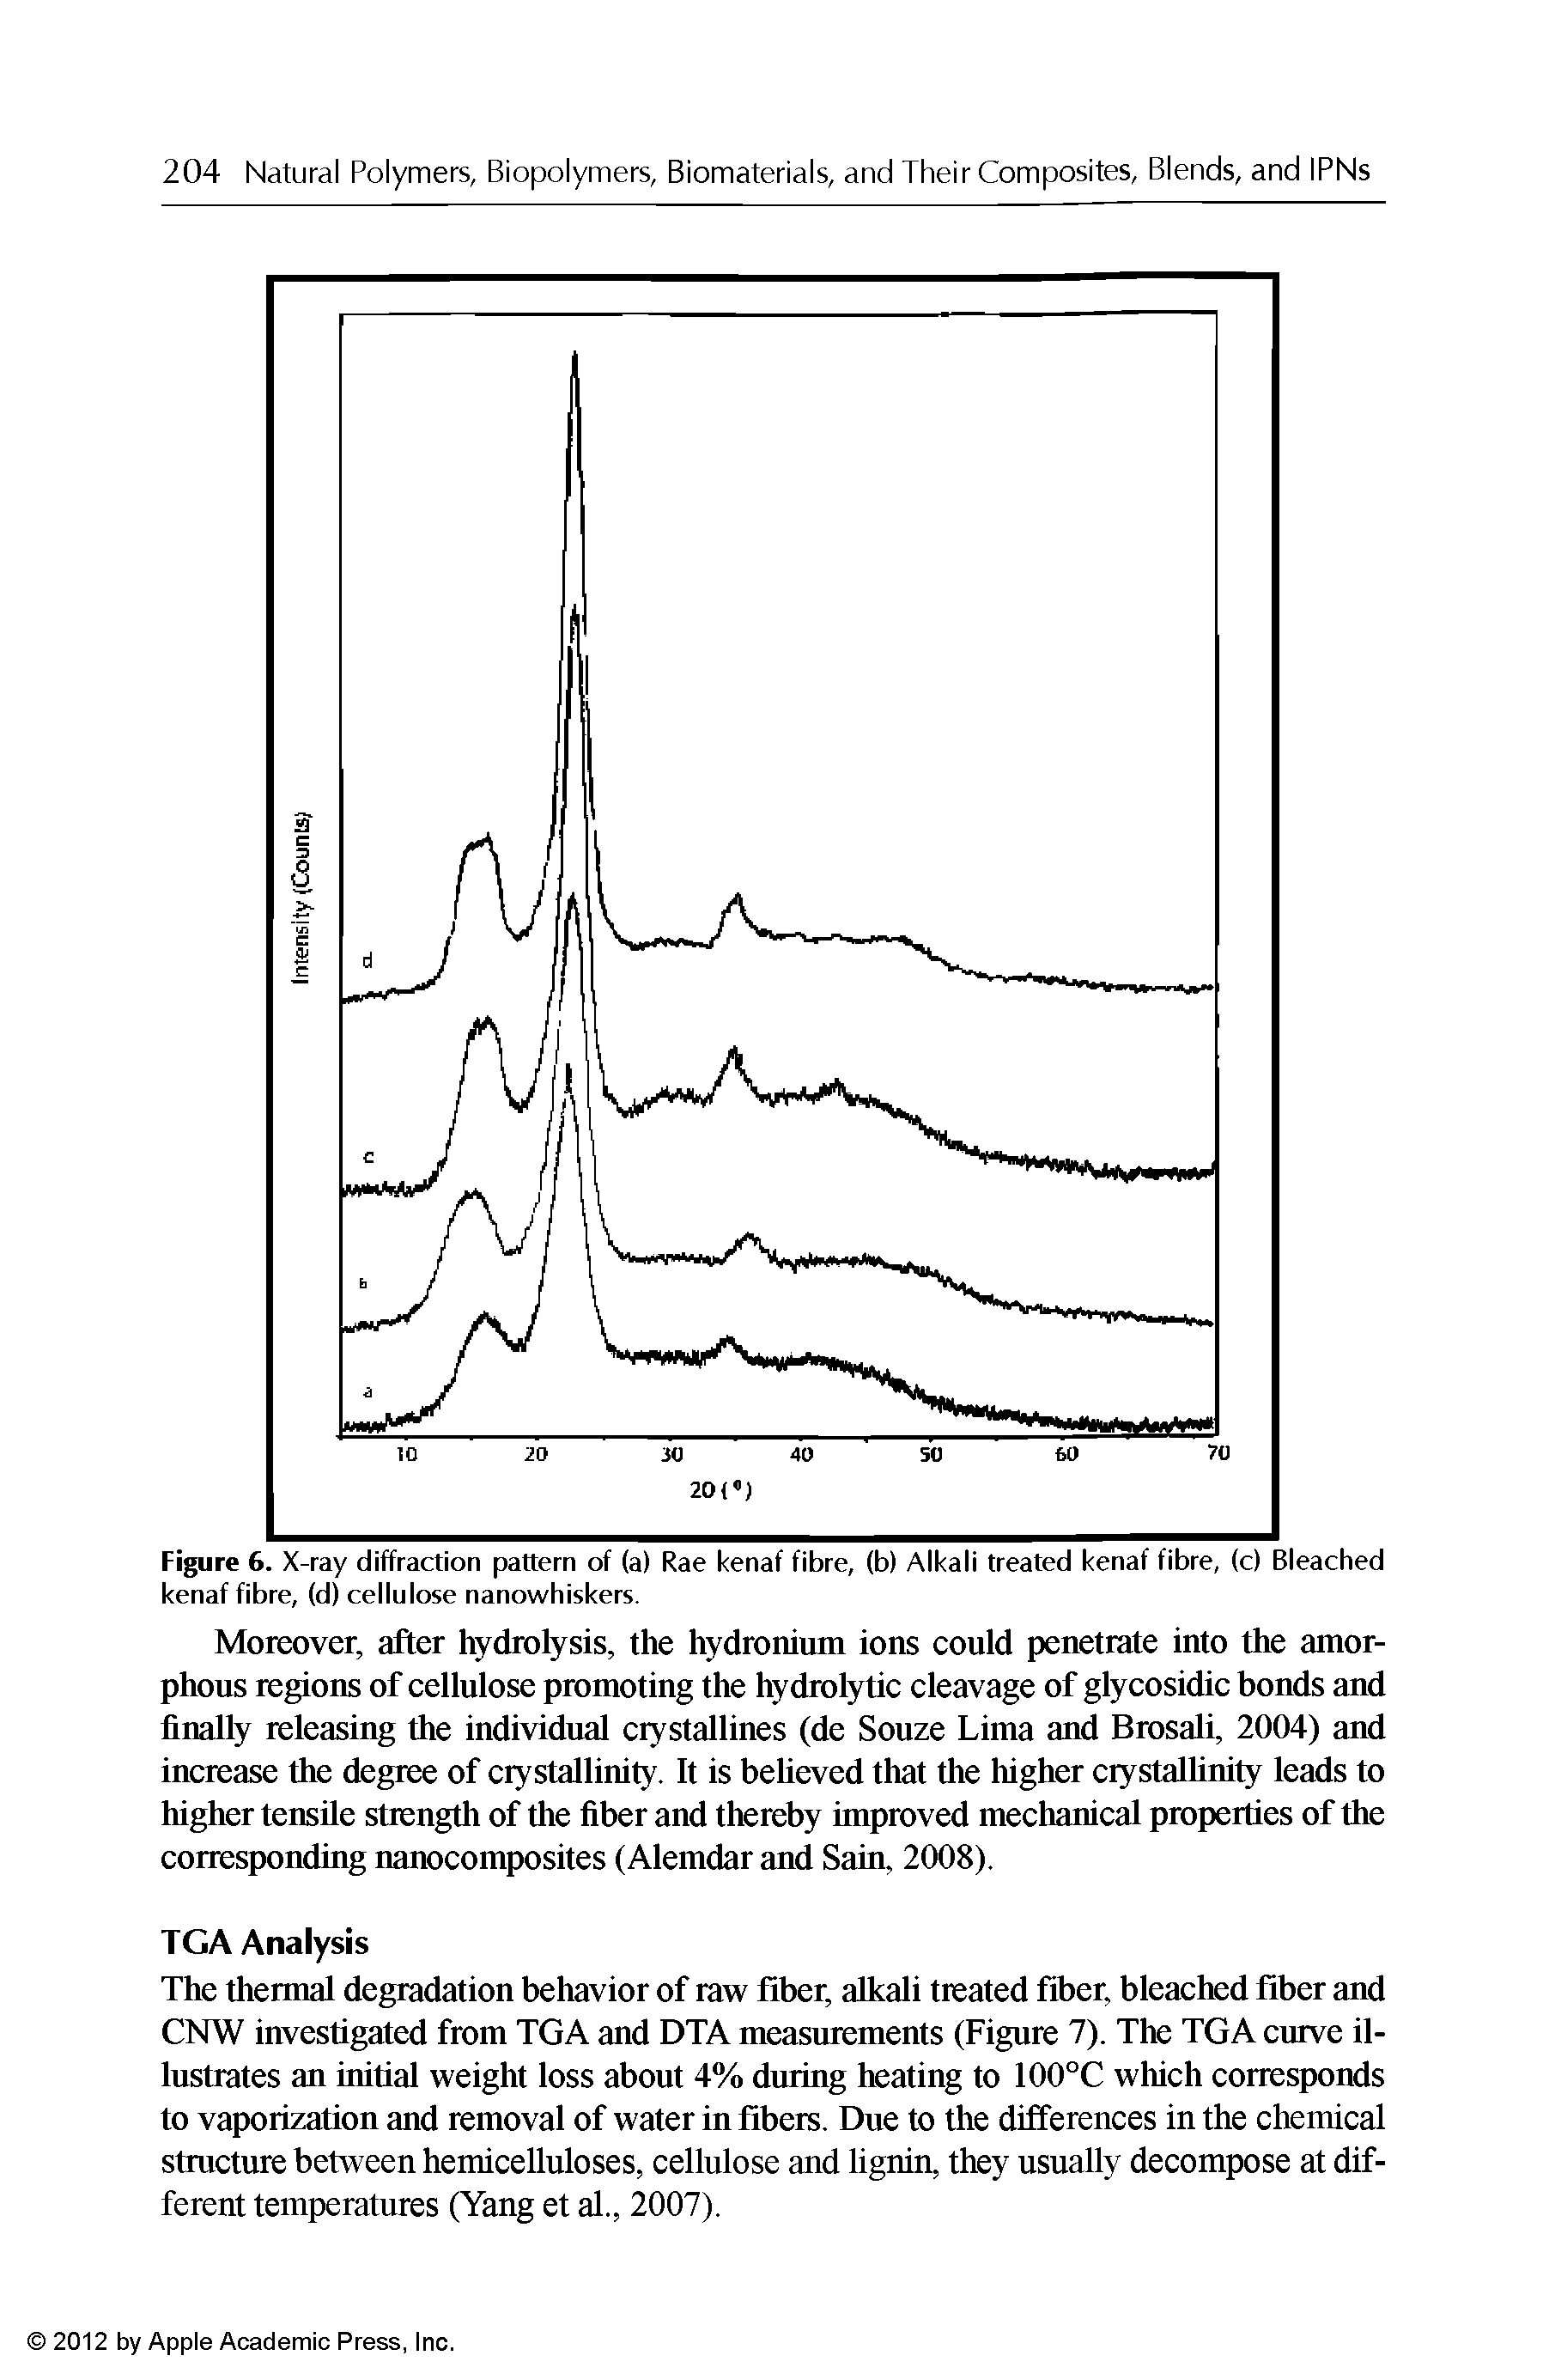 Figure 6. X-ray diffraction pattern of (a) Rae kenaf fibre, (b) Alkali treated kenaf fibre, (c) Bleached kenaf fibre, (d) cellulose nanowhiskers.